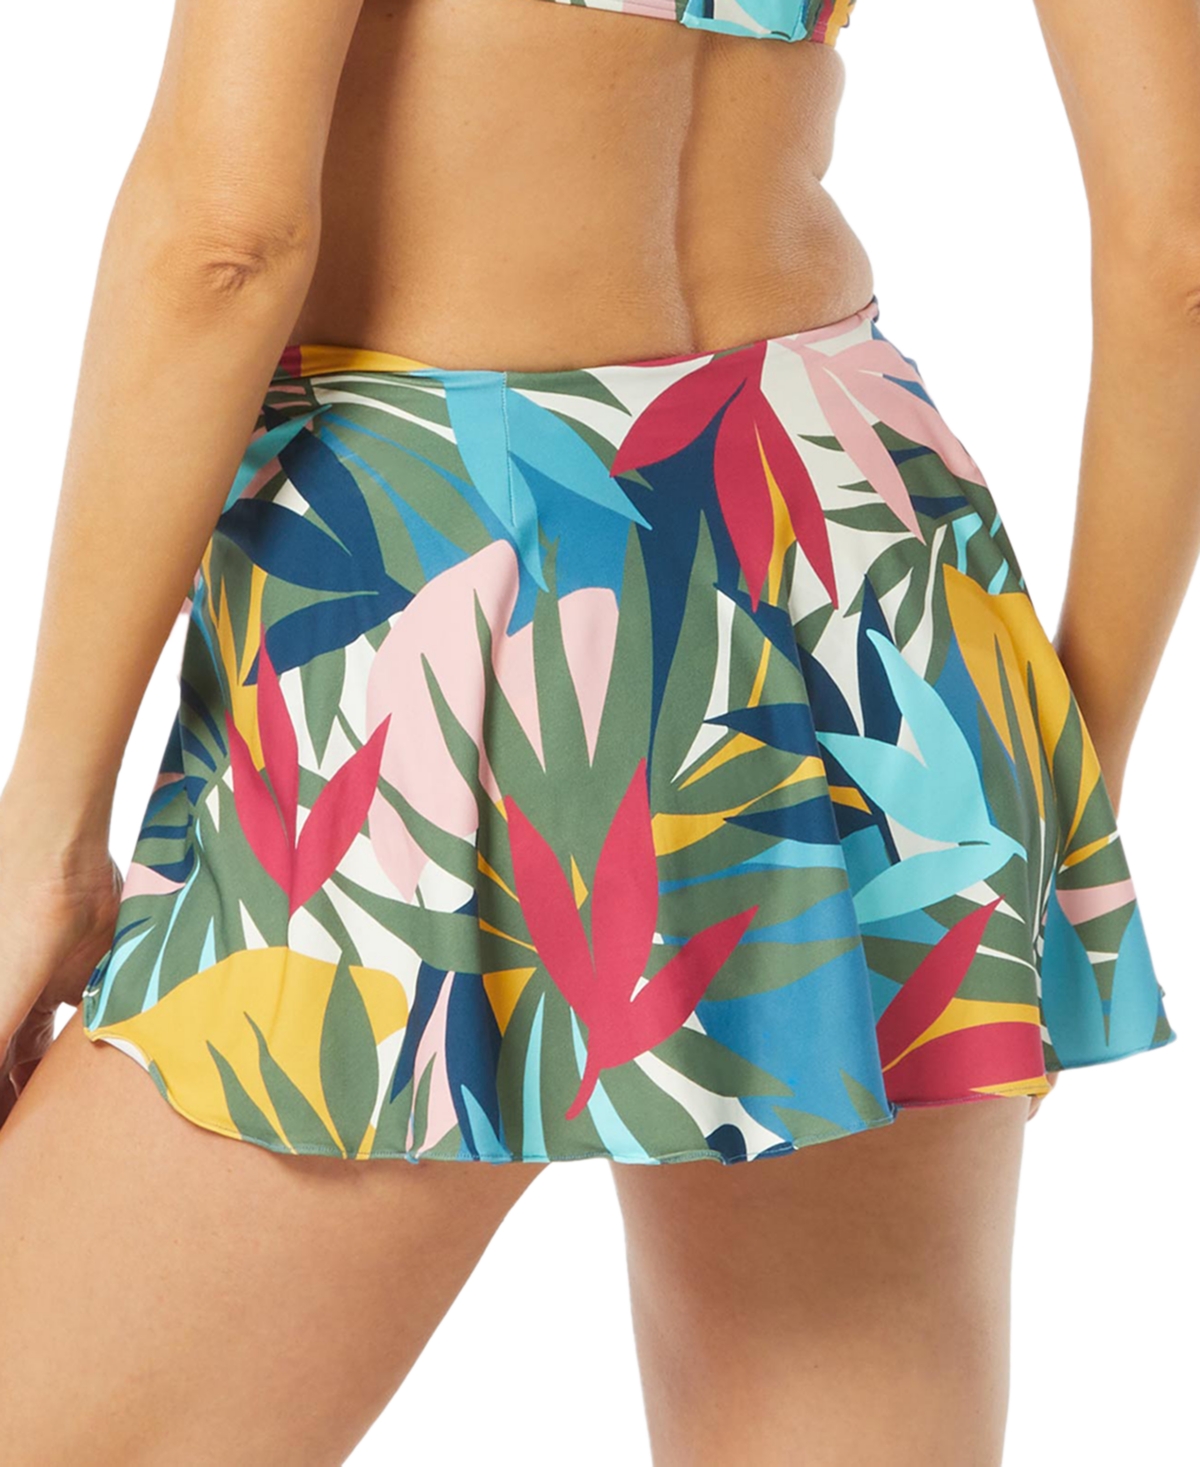 Coco Reef Women's Contours Pacific Sarong Skirt Bikini Bottoms